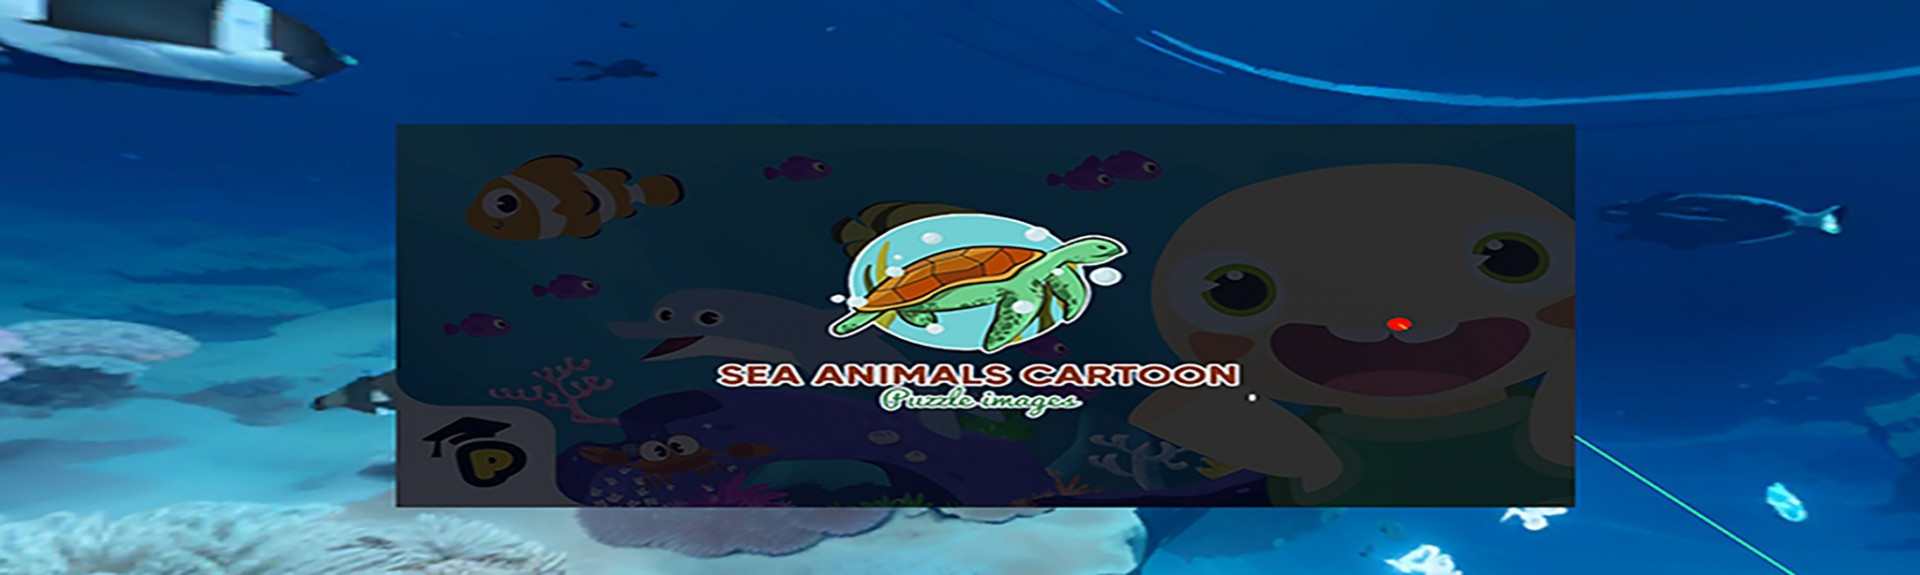 Sea animals cartoon